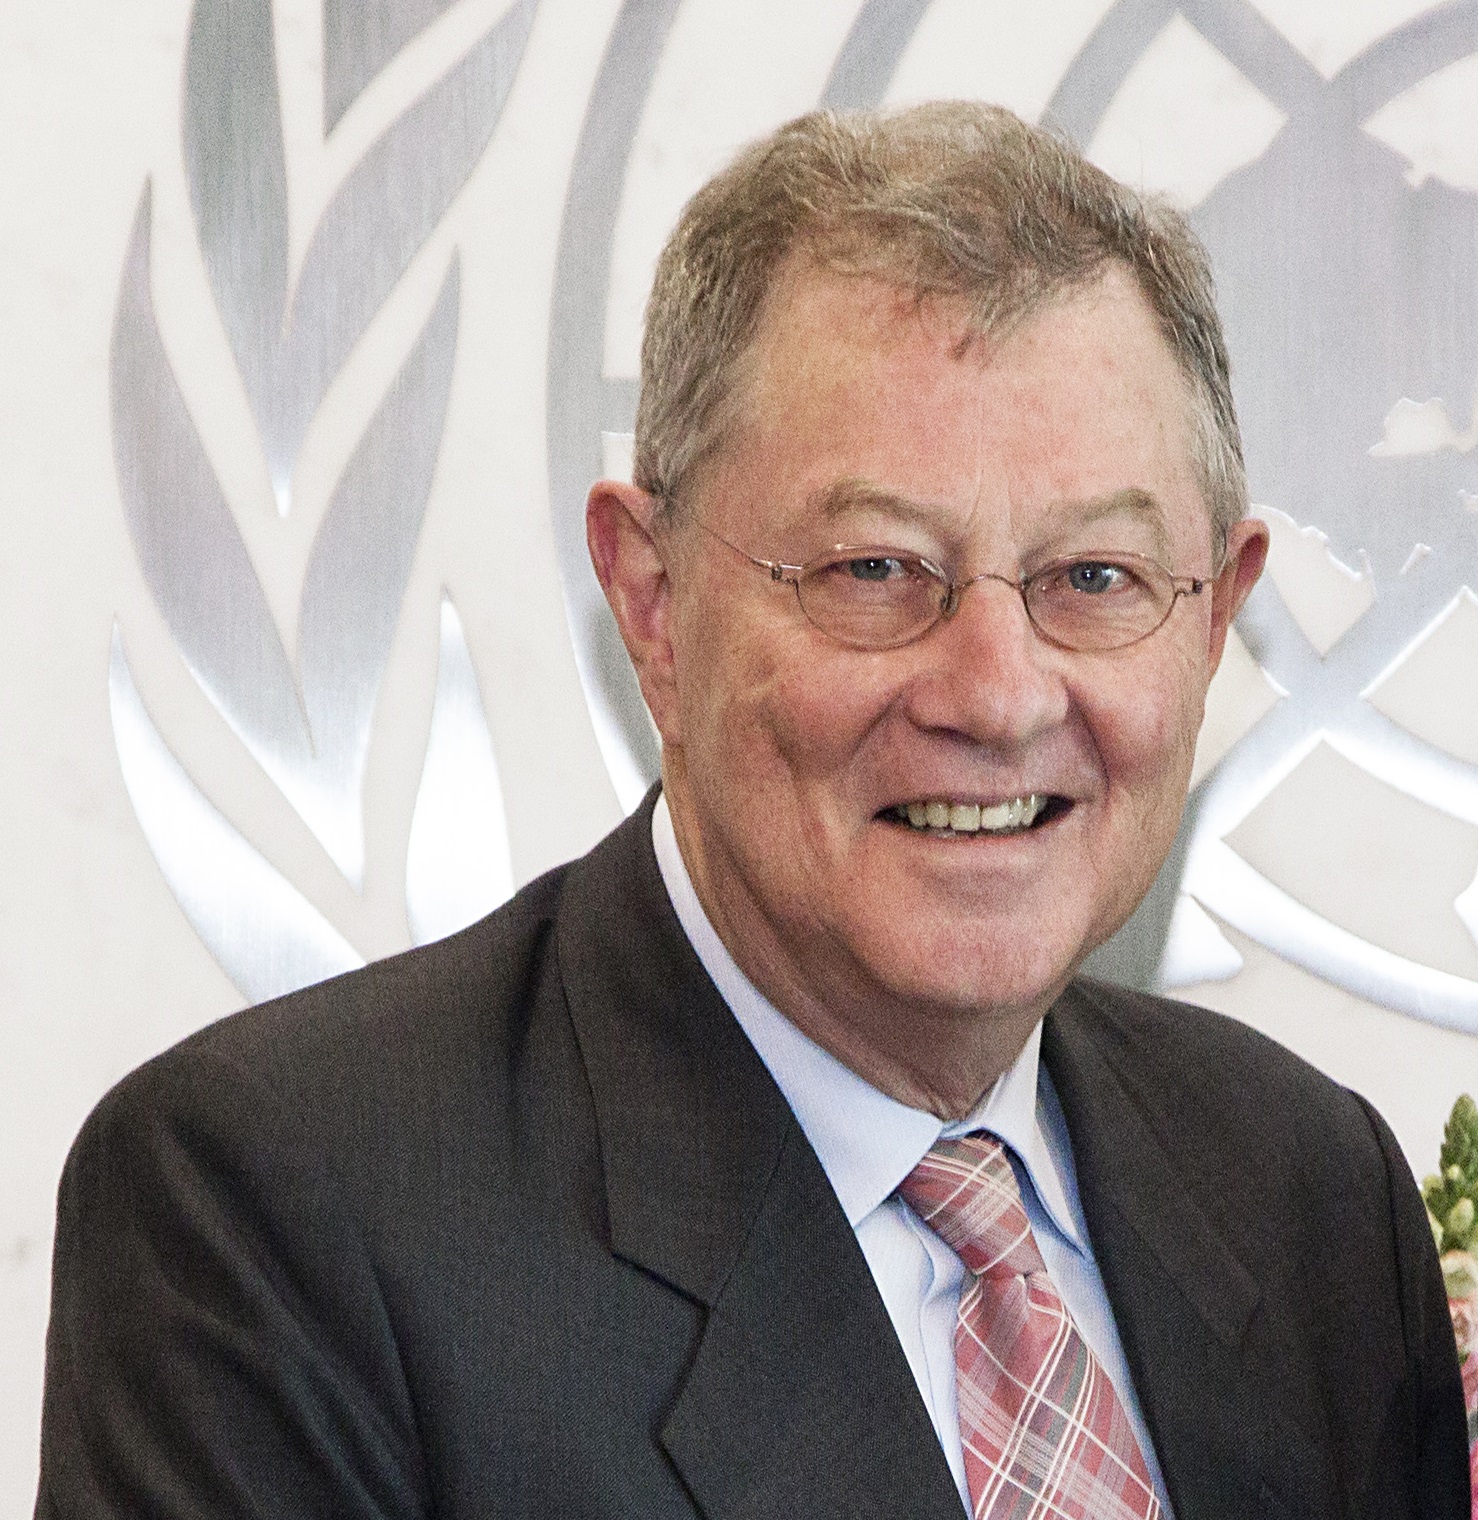 Robert Serry UN Special Coordinator